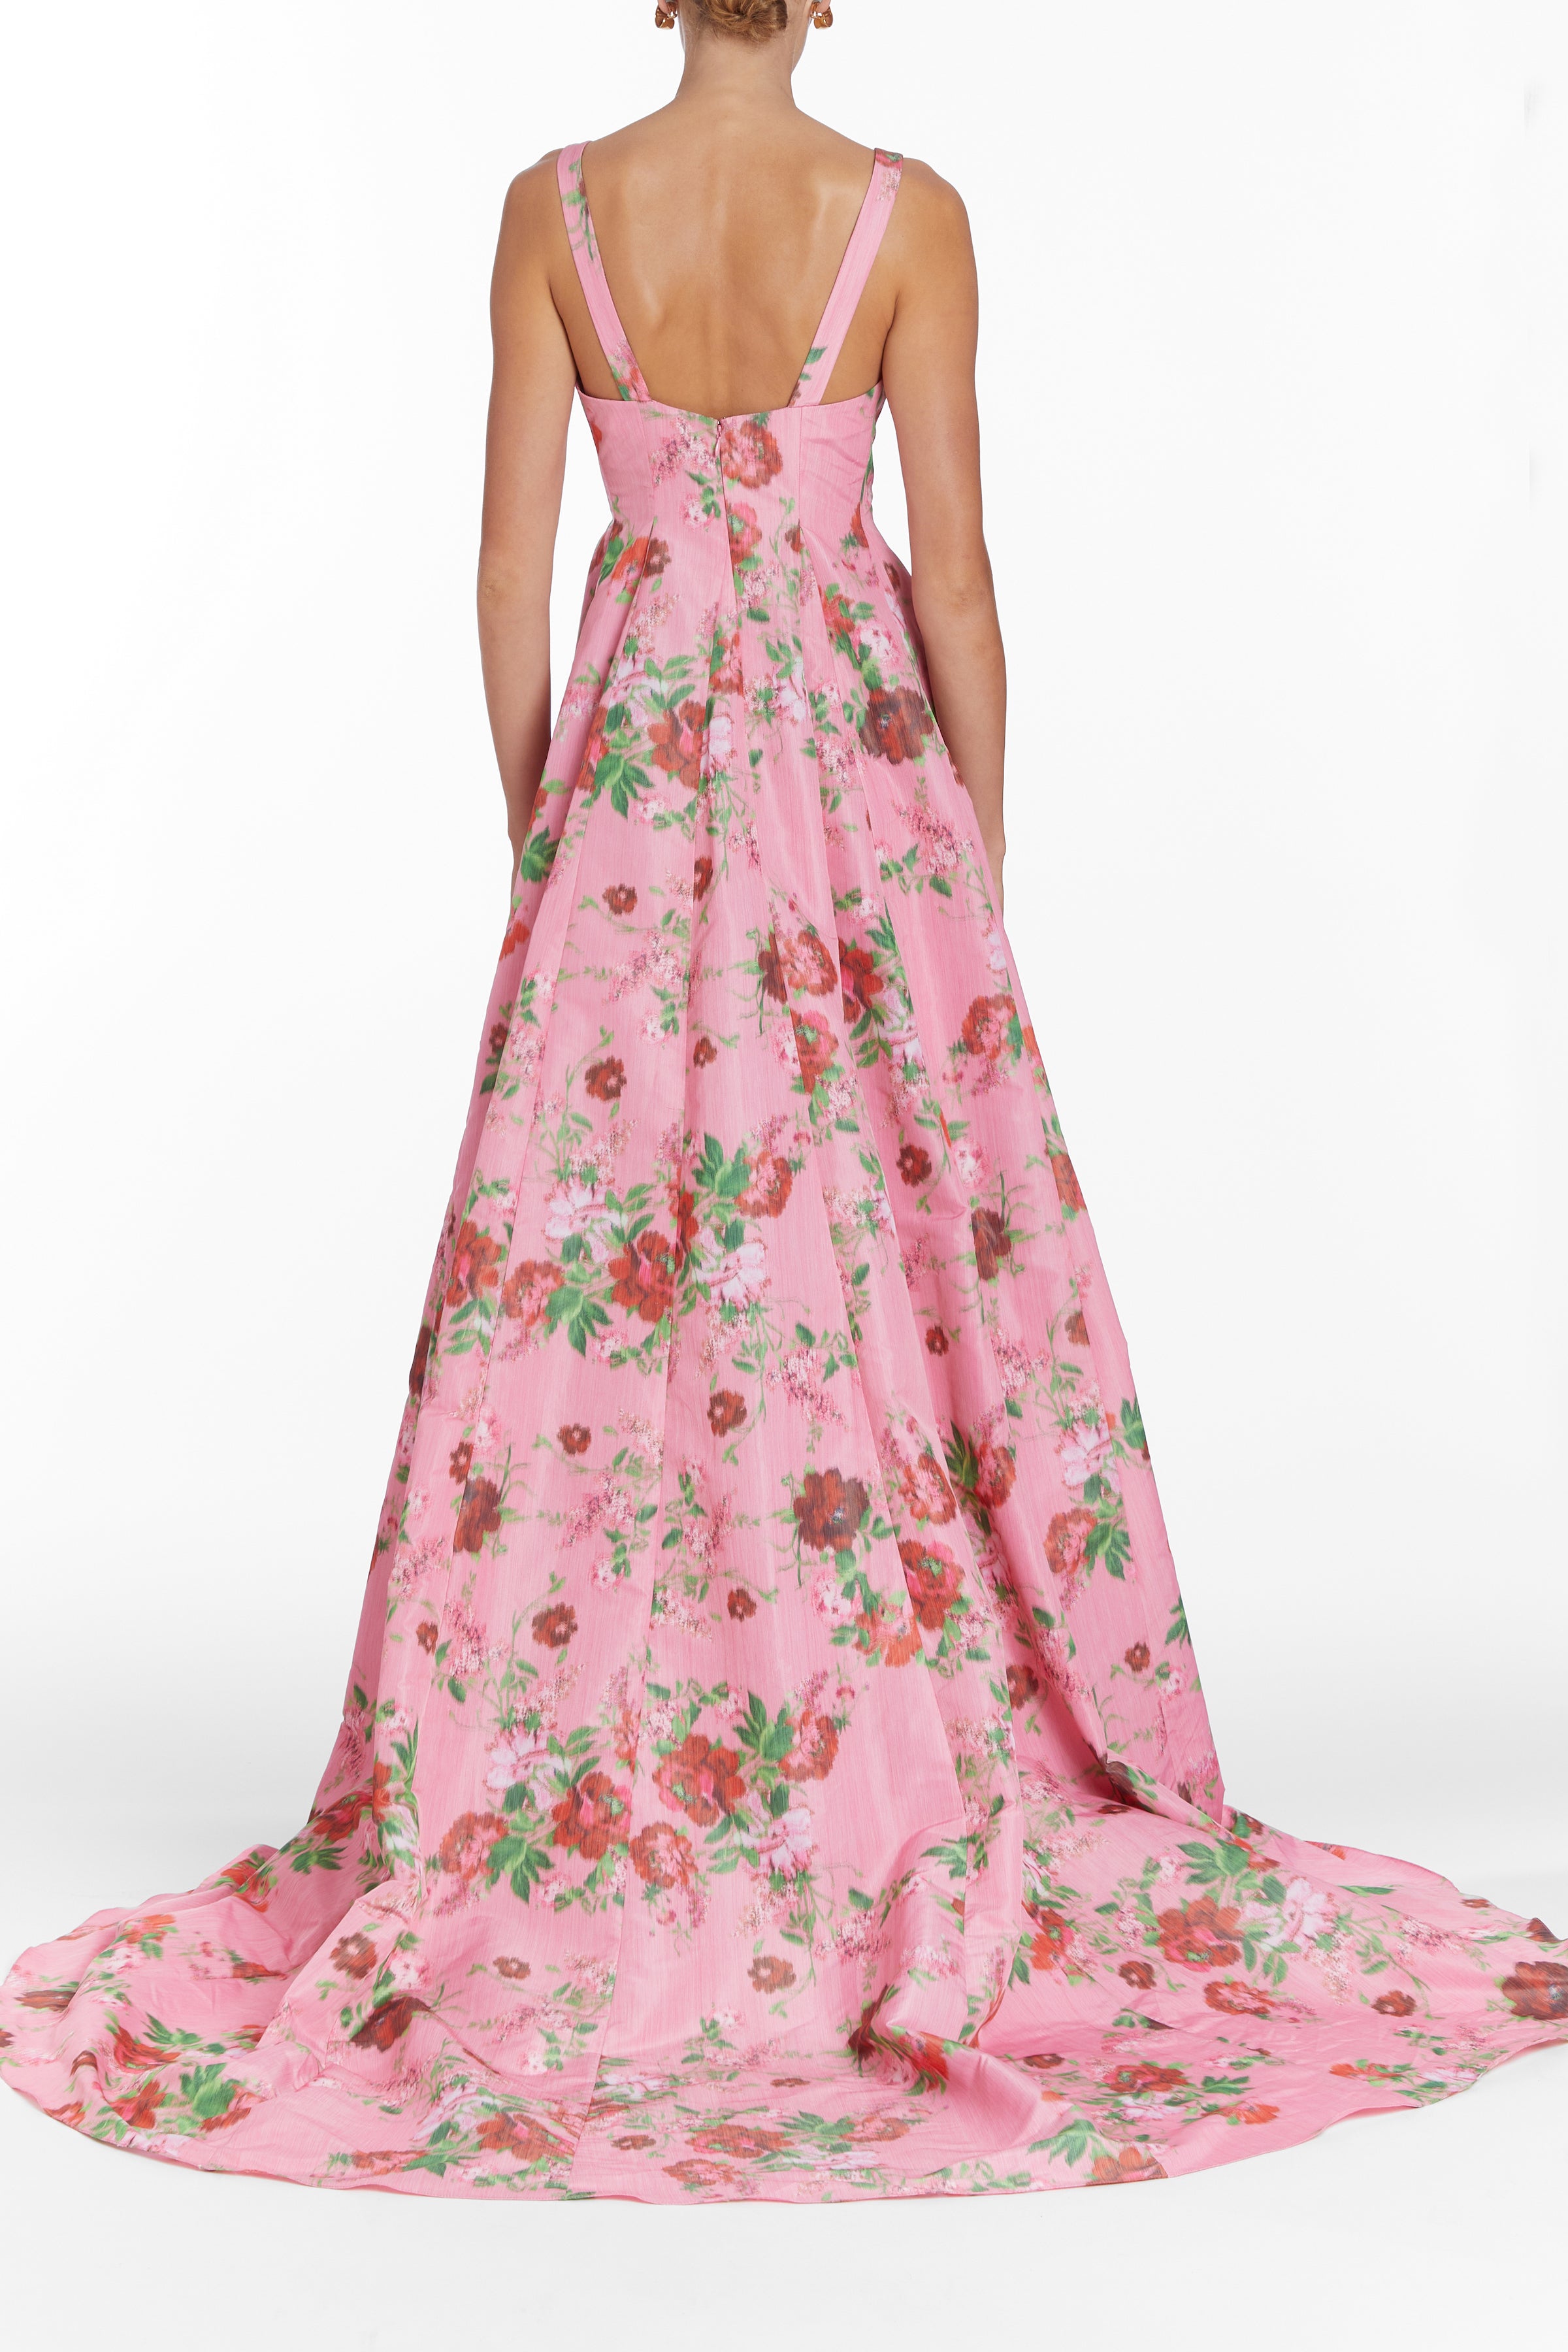 Botticelli Pink Floral Ikat Paneled Gown